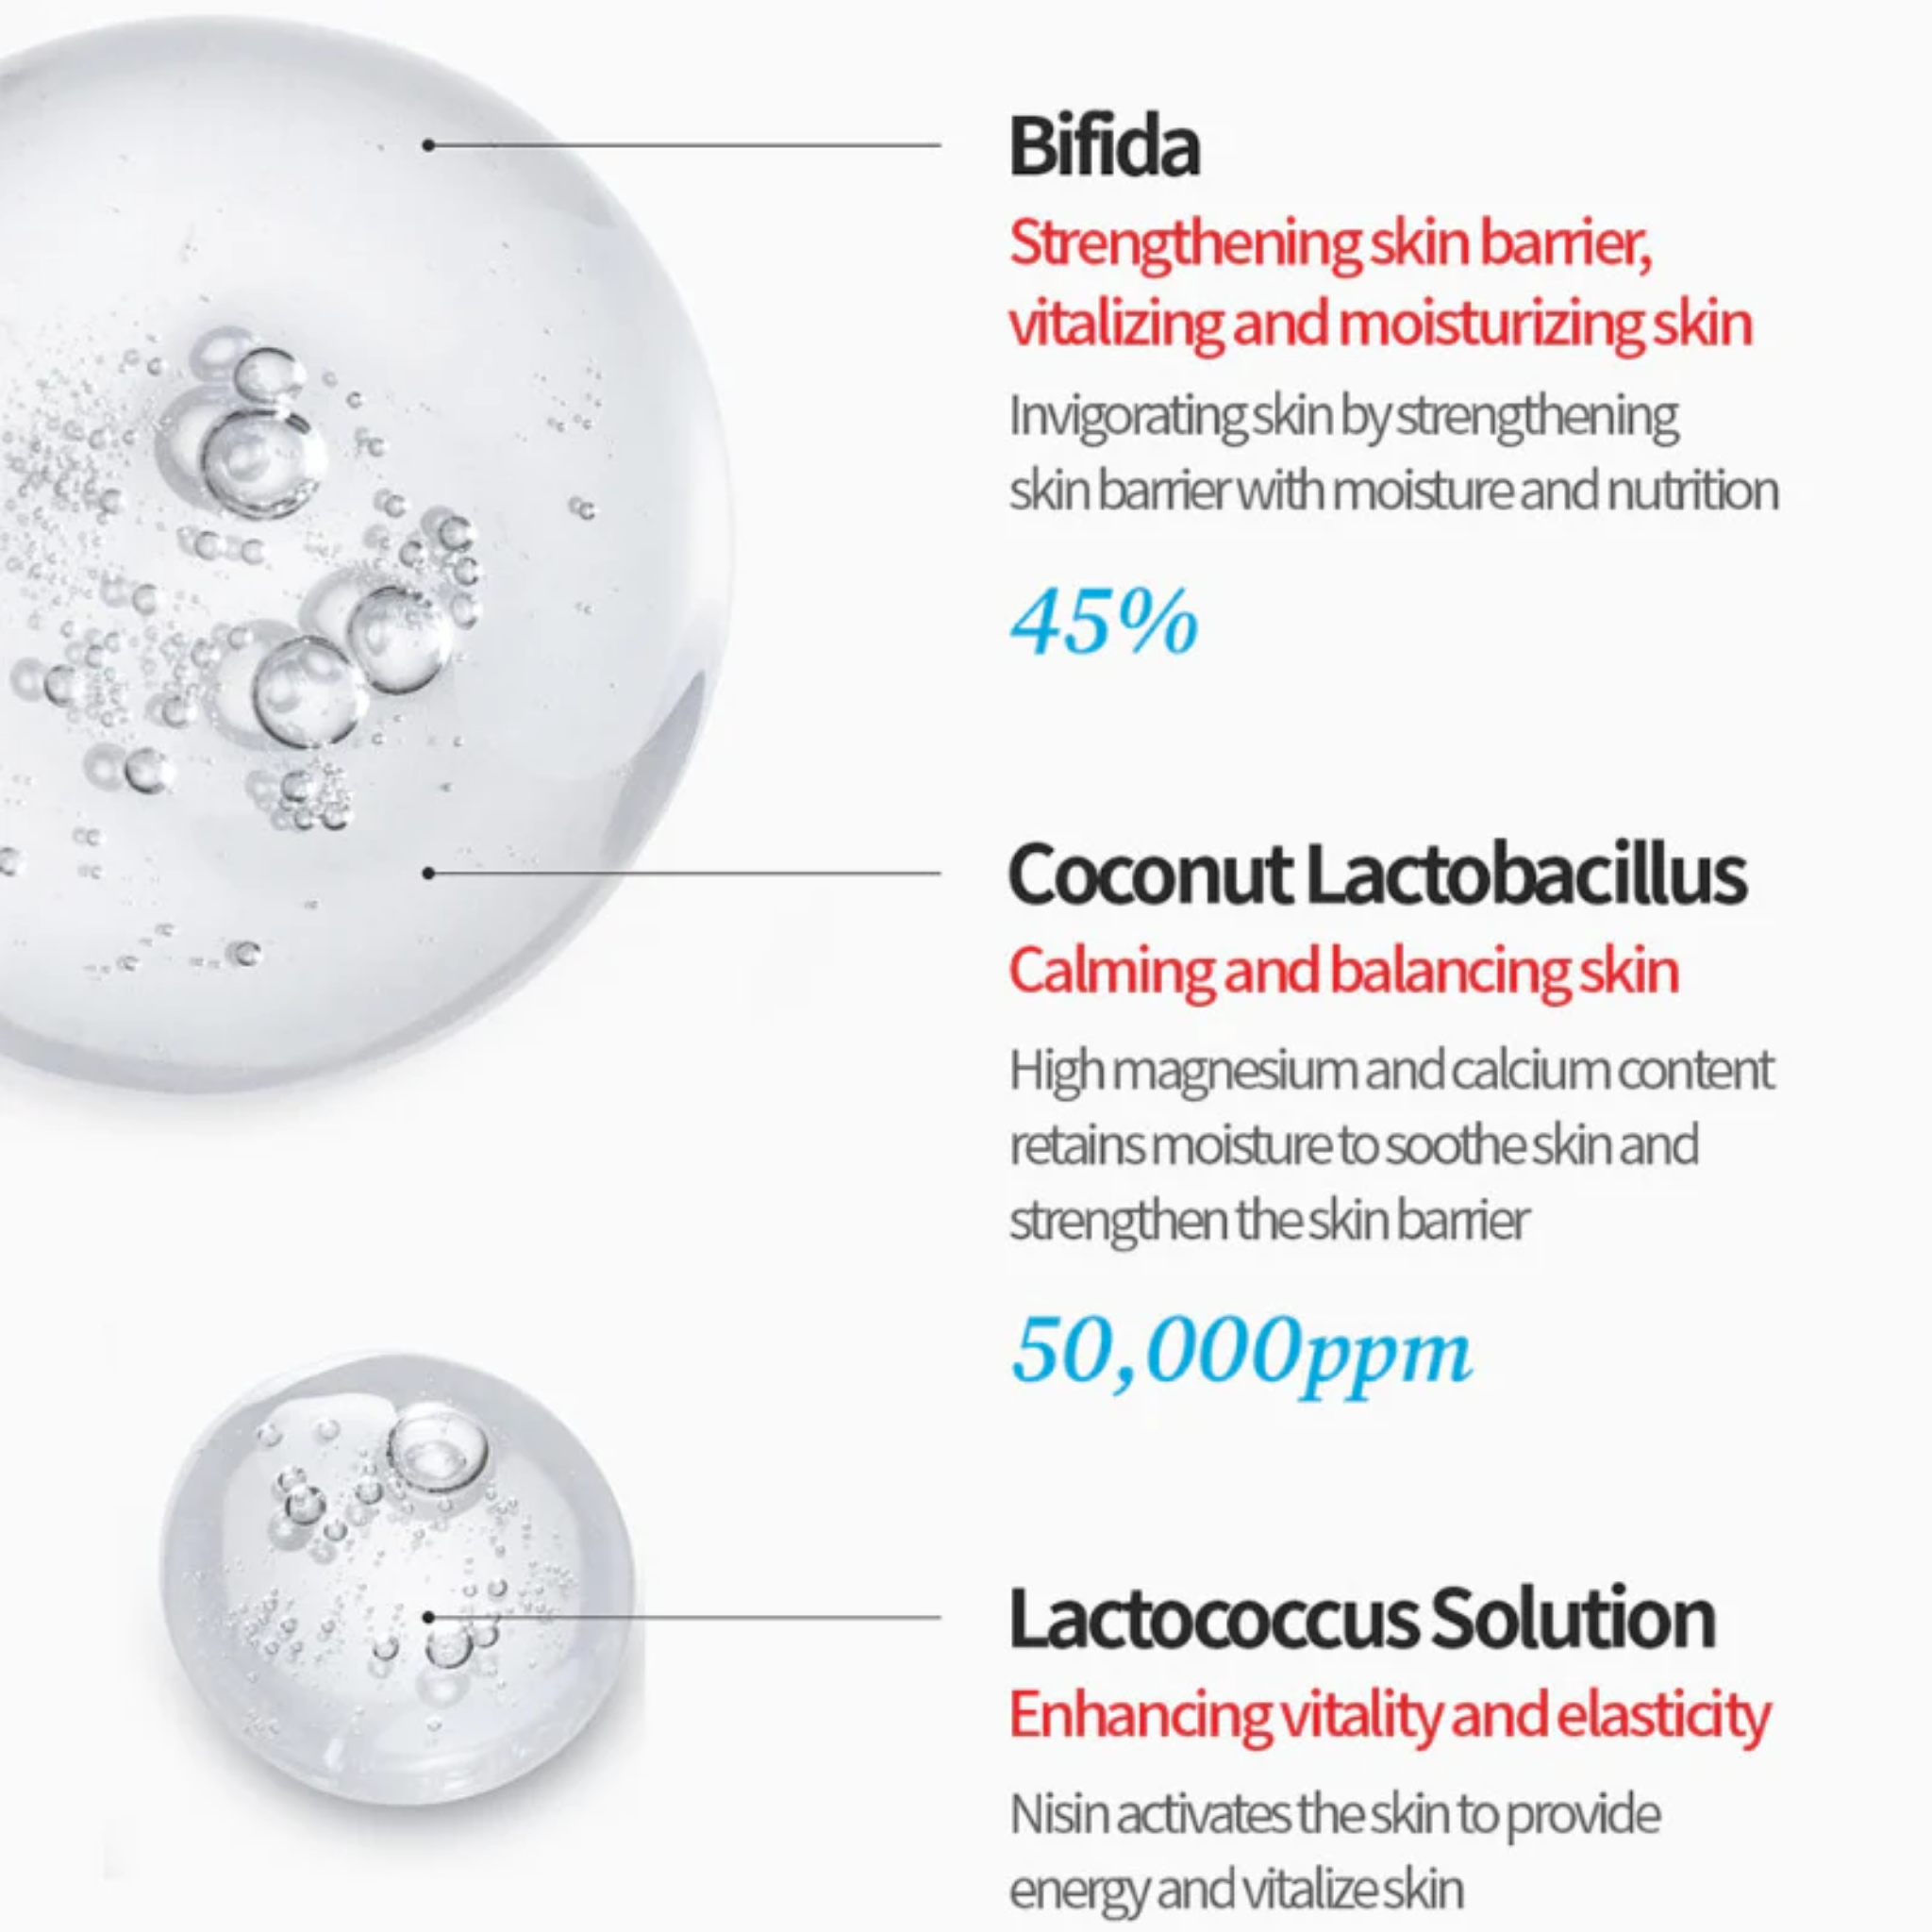 TOCOBO Bifida Biome Essence (50ml) Ingredients